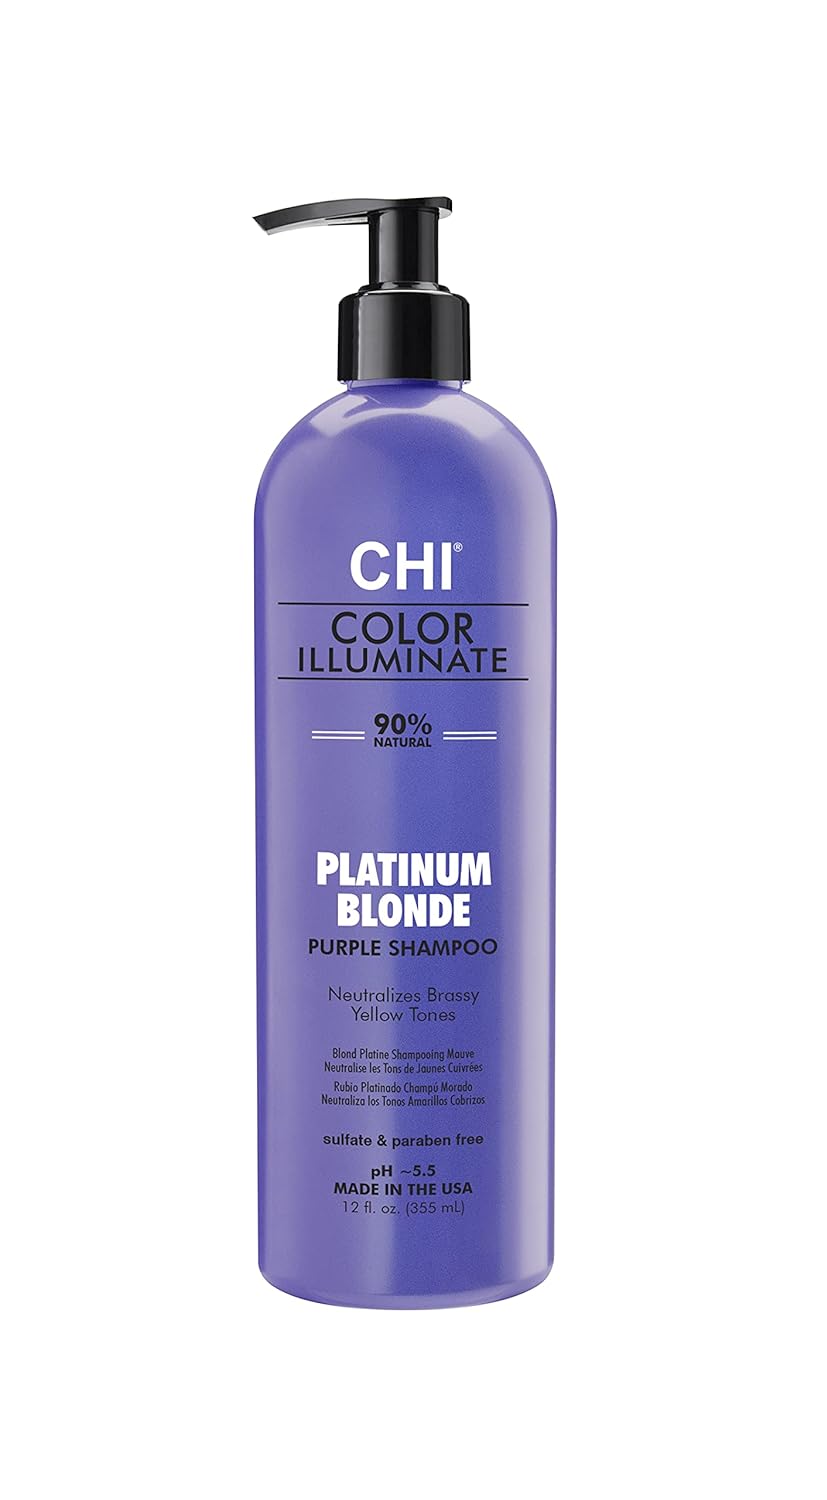 CHI Ionic Color Illuminate Shampoo Platinum Blonde 12oz, Platinum Blonde, 12 fluid_ounces : Beauty & Personal Care